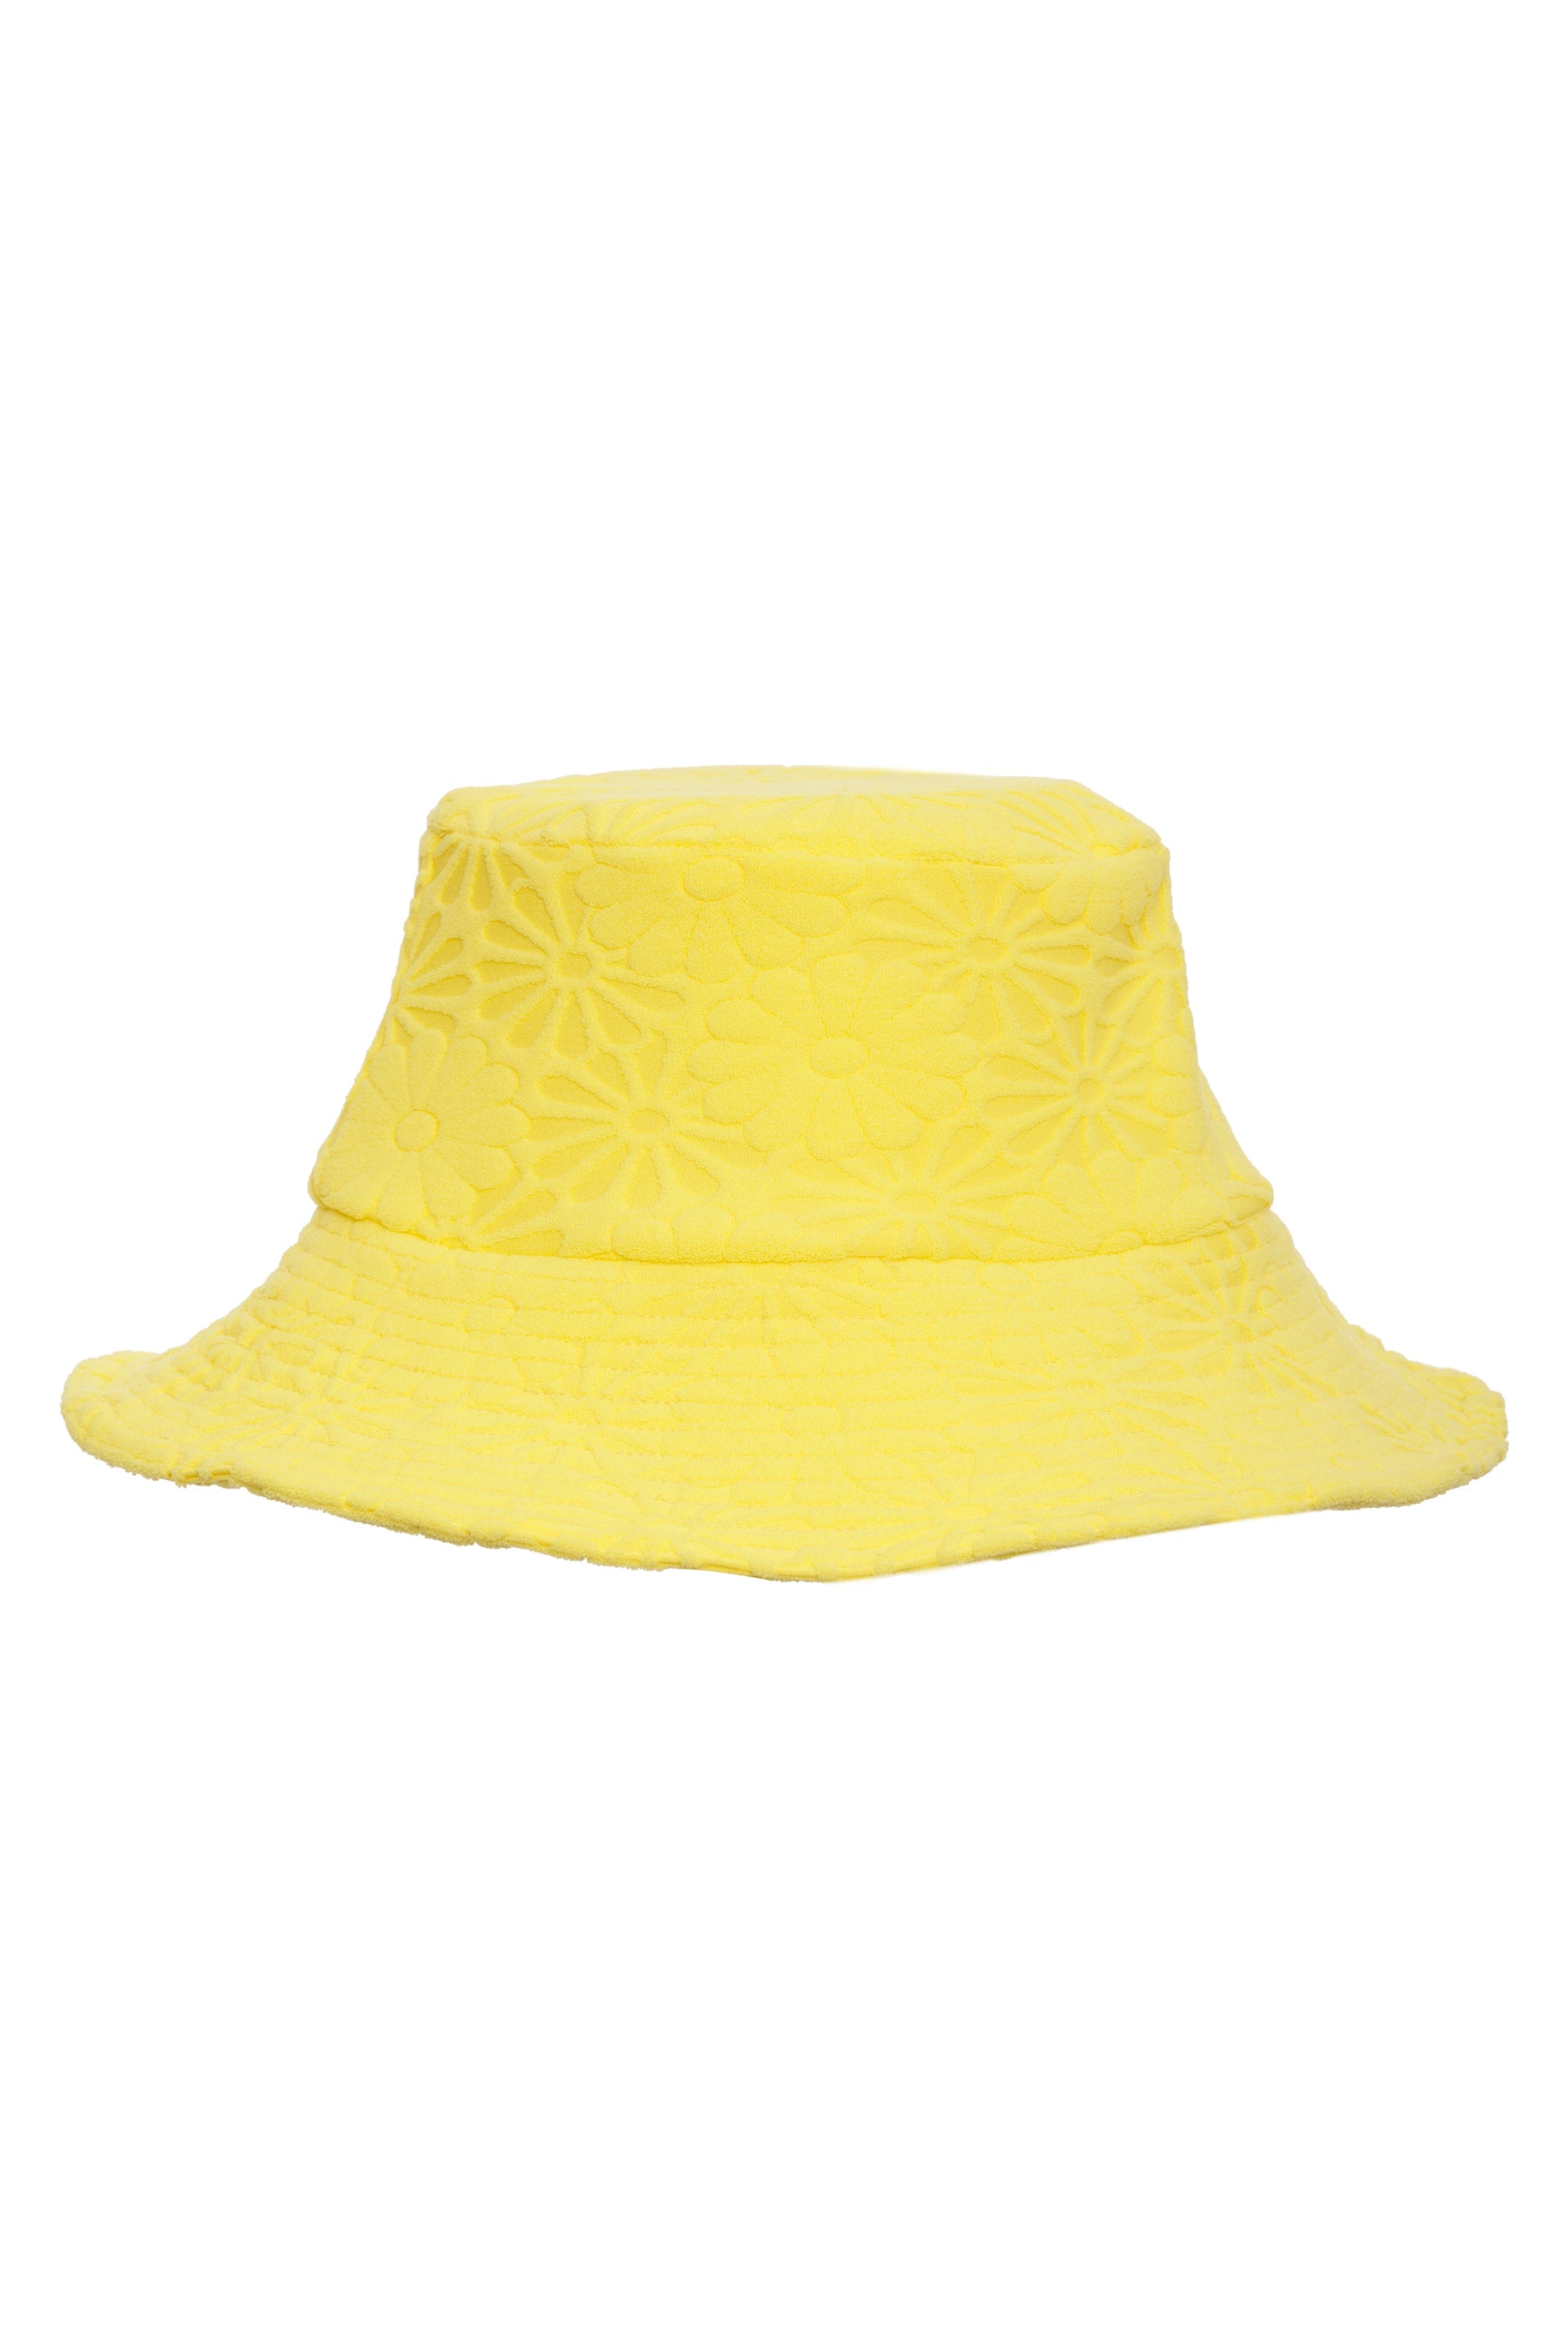 for Love & Lemons - Ellora Bucket Hat, Women's Accessories, Yellow, Xs/s, Women's Apparel, Women's Clothing